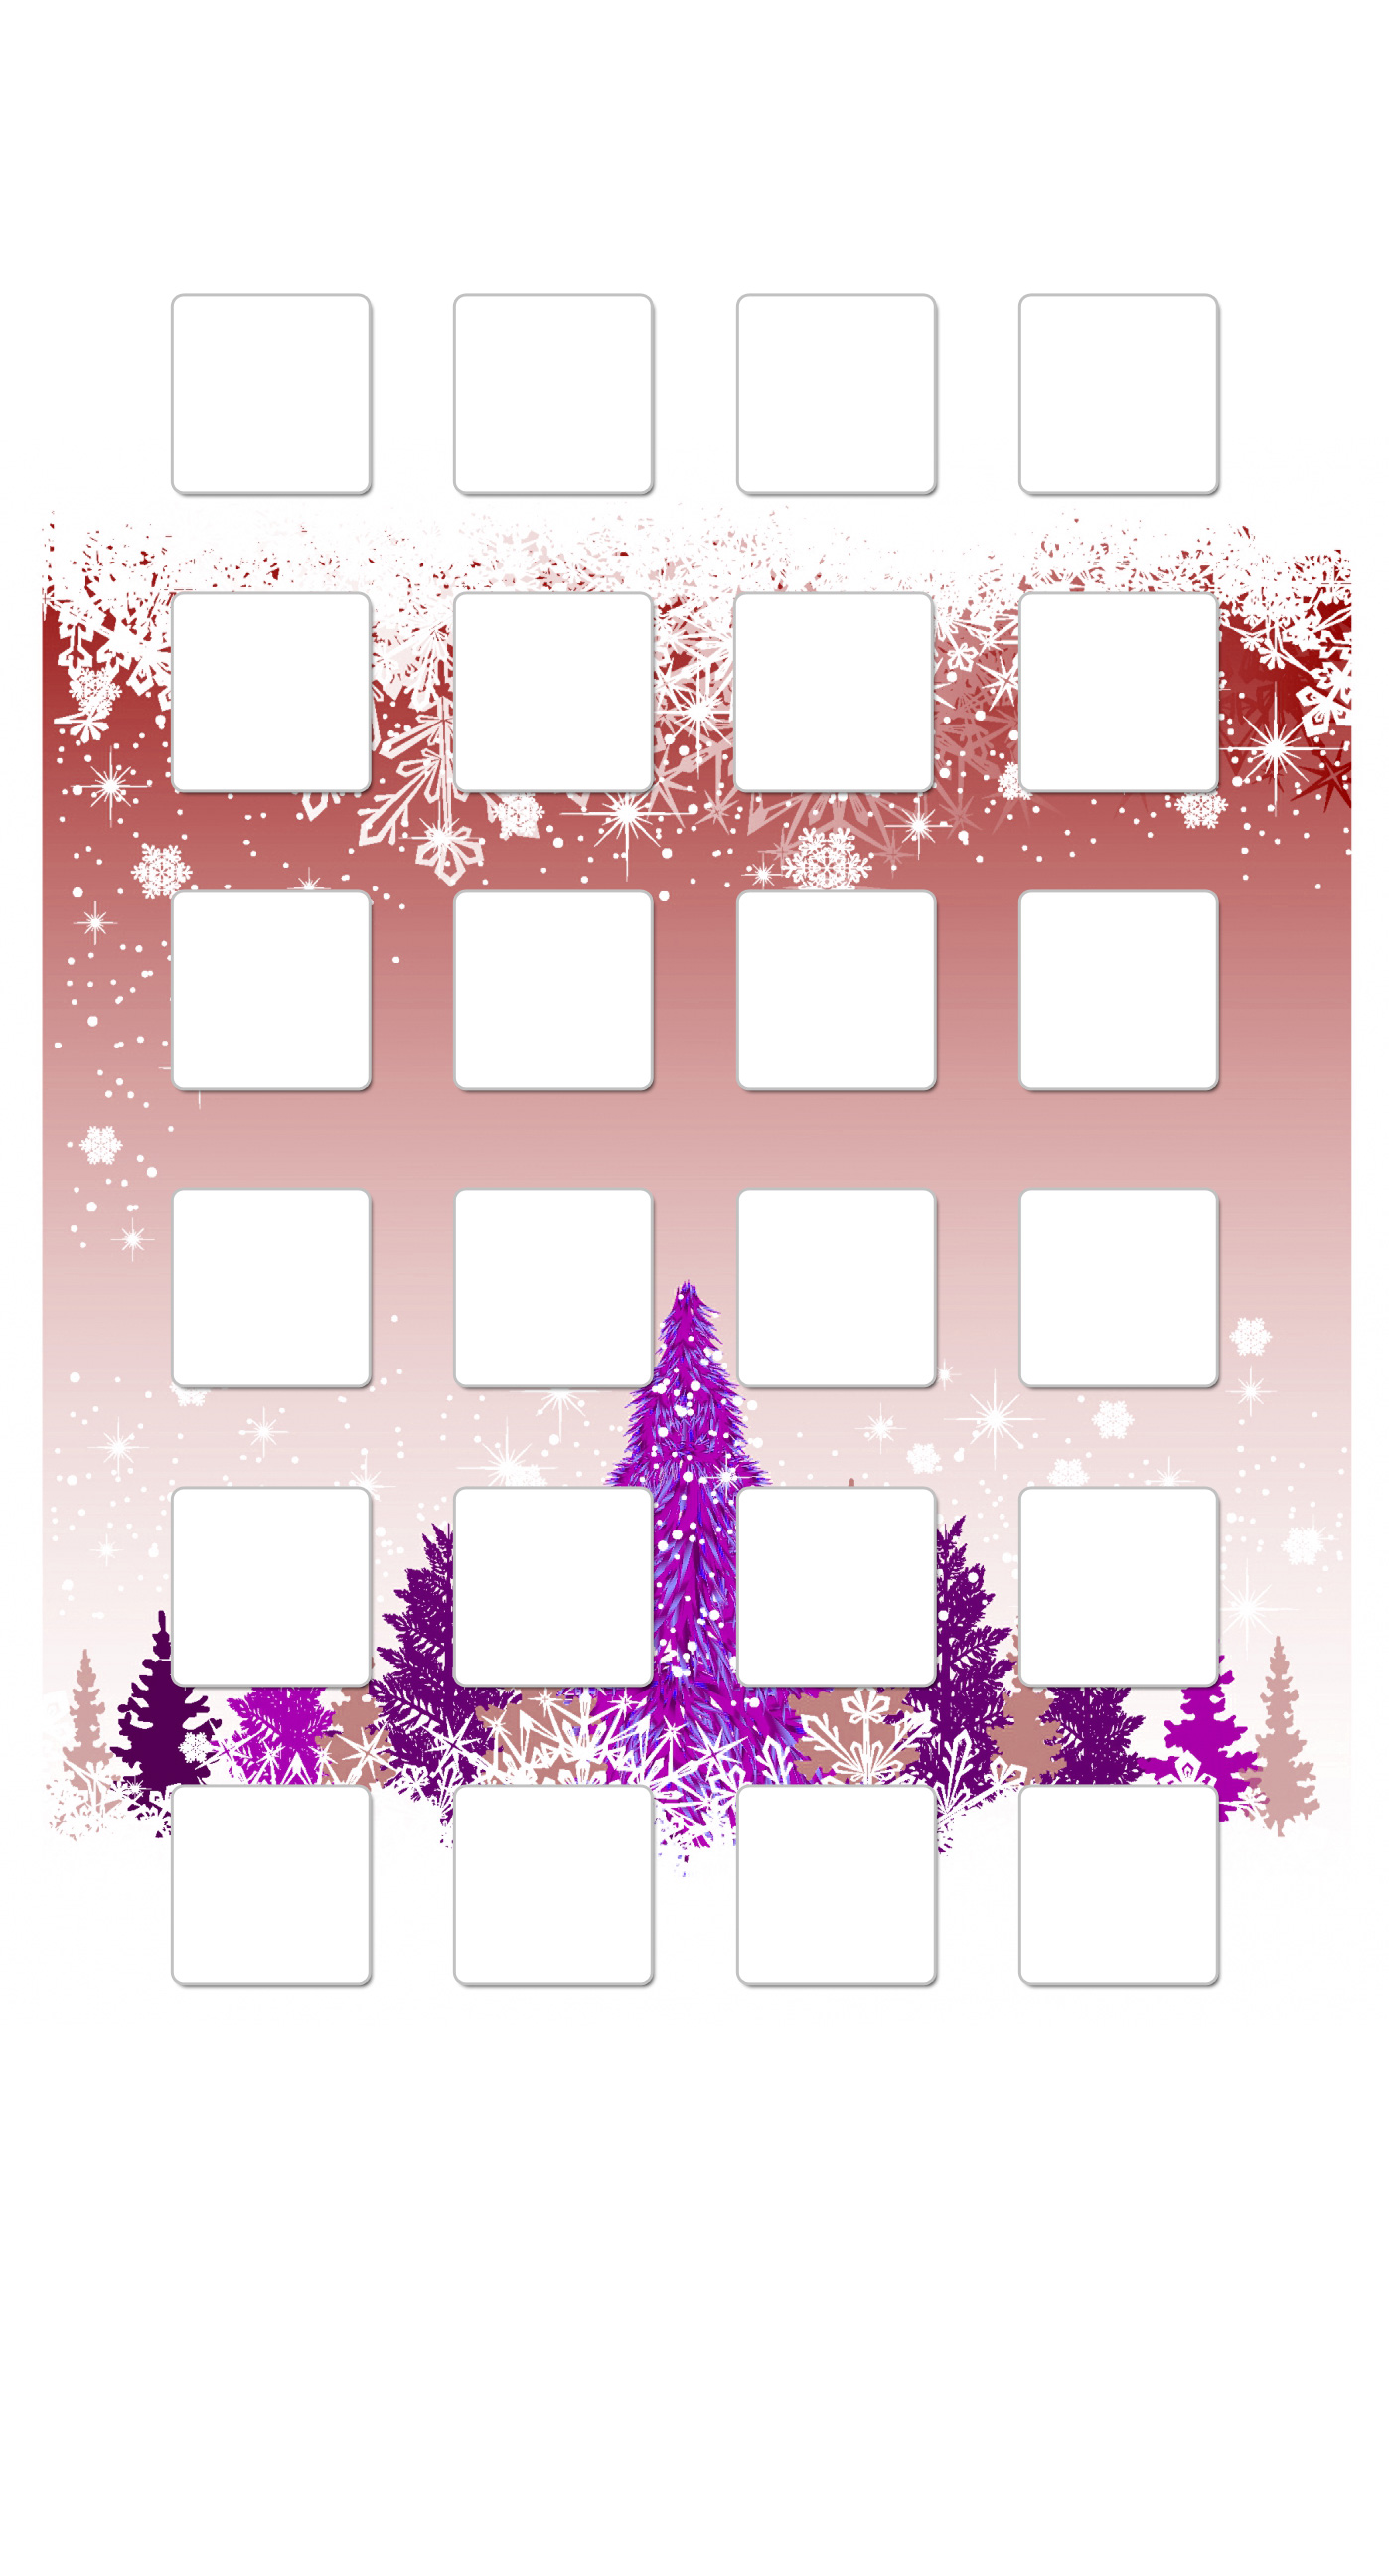 棚冬雪木赤紫可愛い女子向け Wallpaper Sc Iphone6splus壁紙